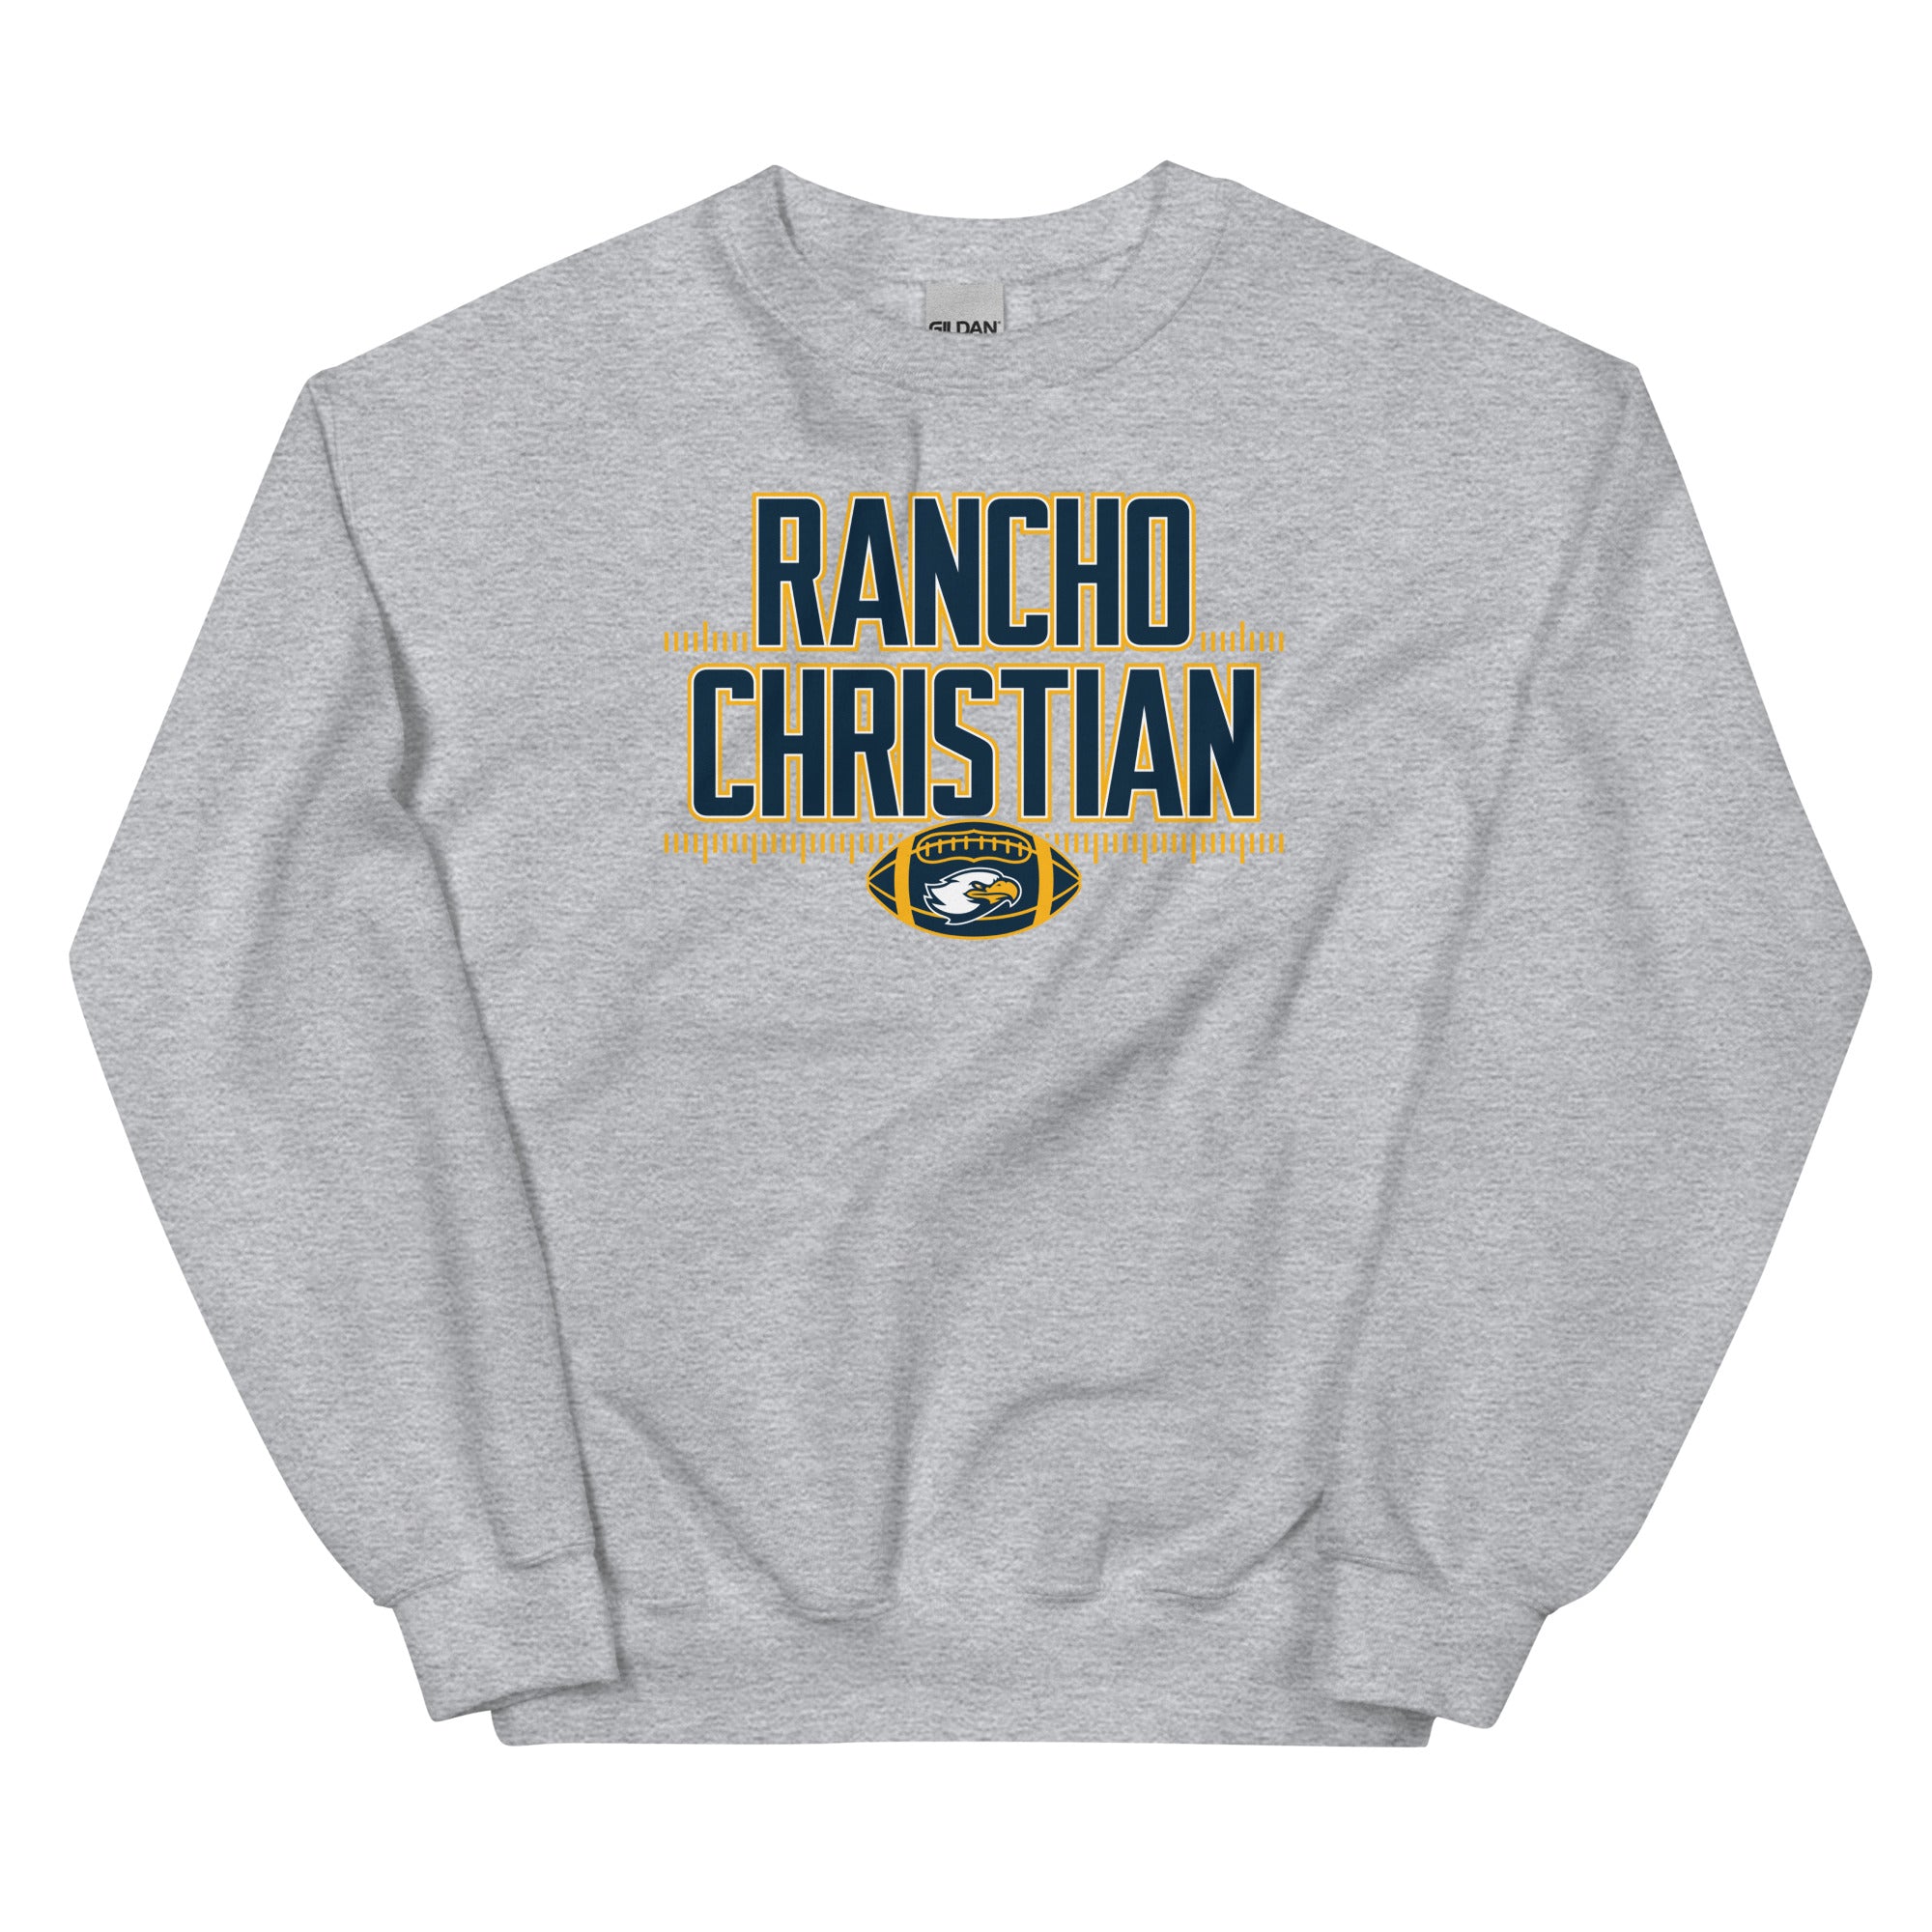 Rancho Christian Unisex Crew Neck Sweatshirt